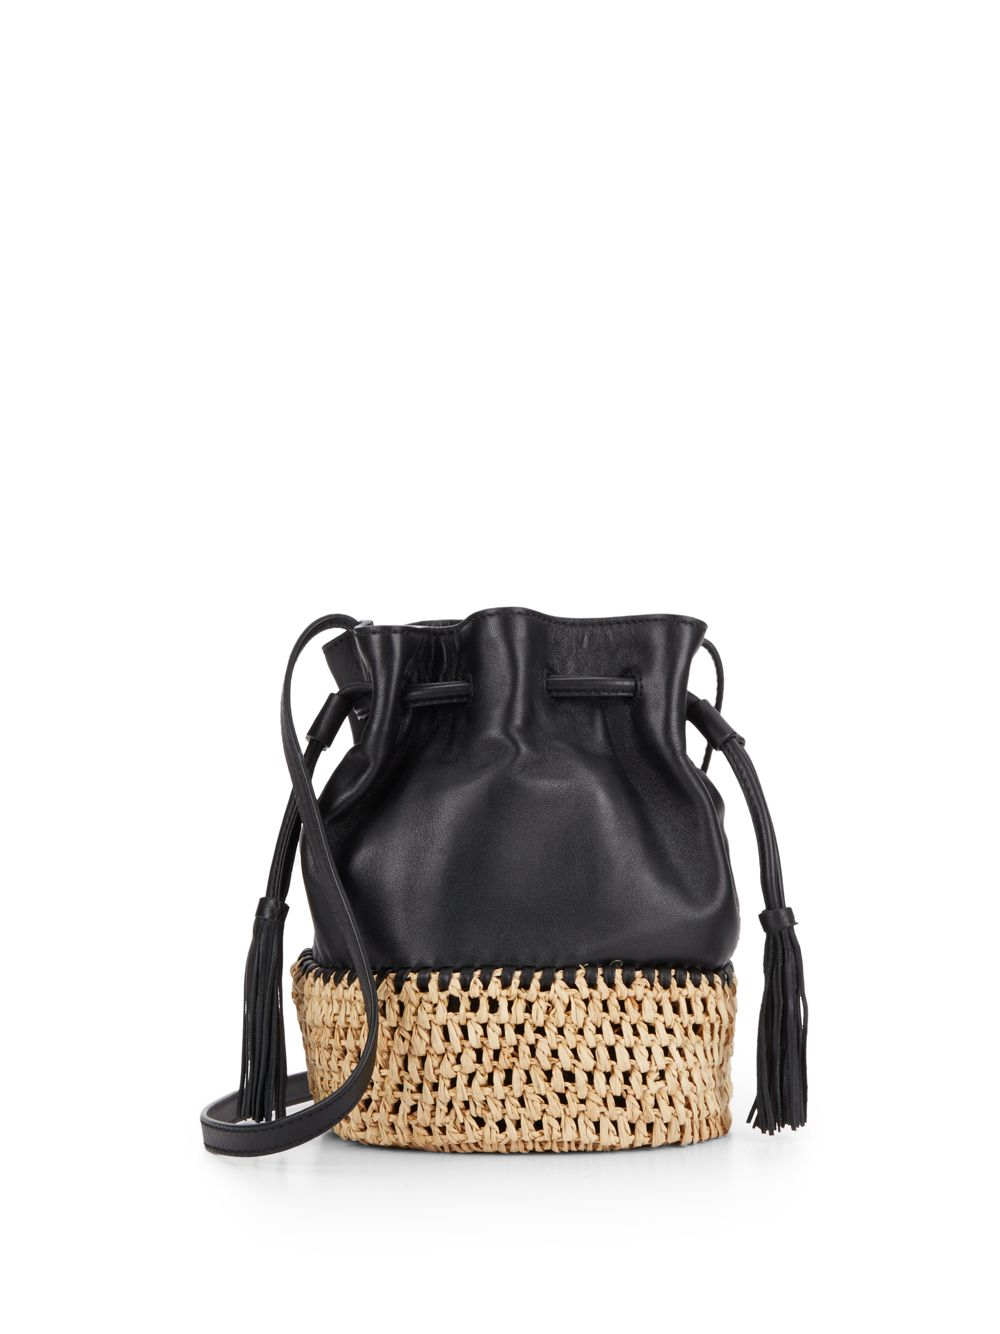 Loeffler Randall Woven Straw & Leather Mini Bucket Bag in Black